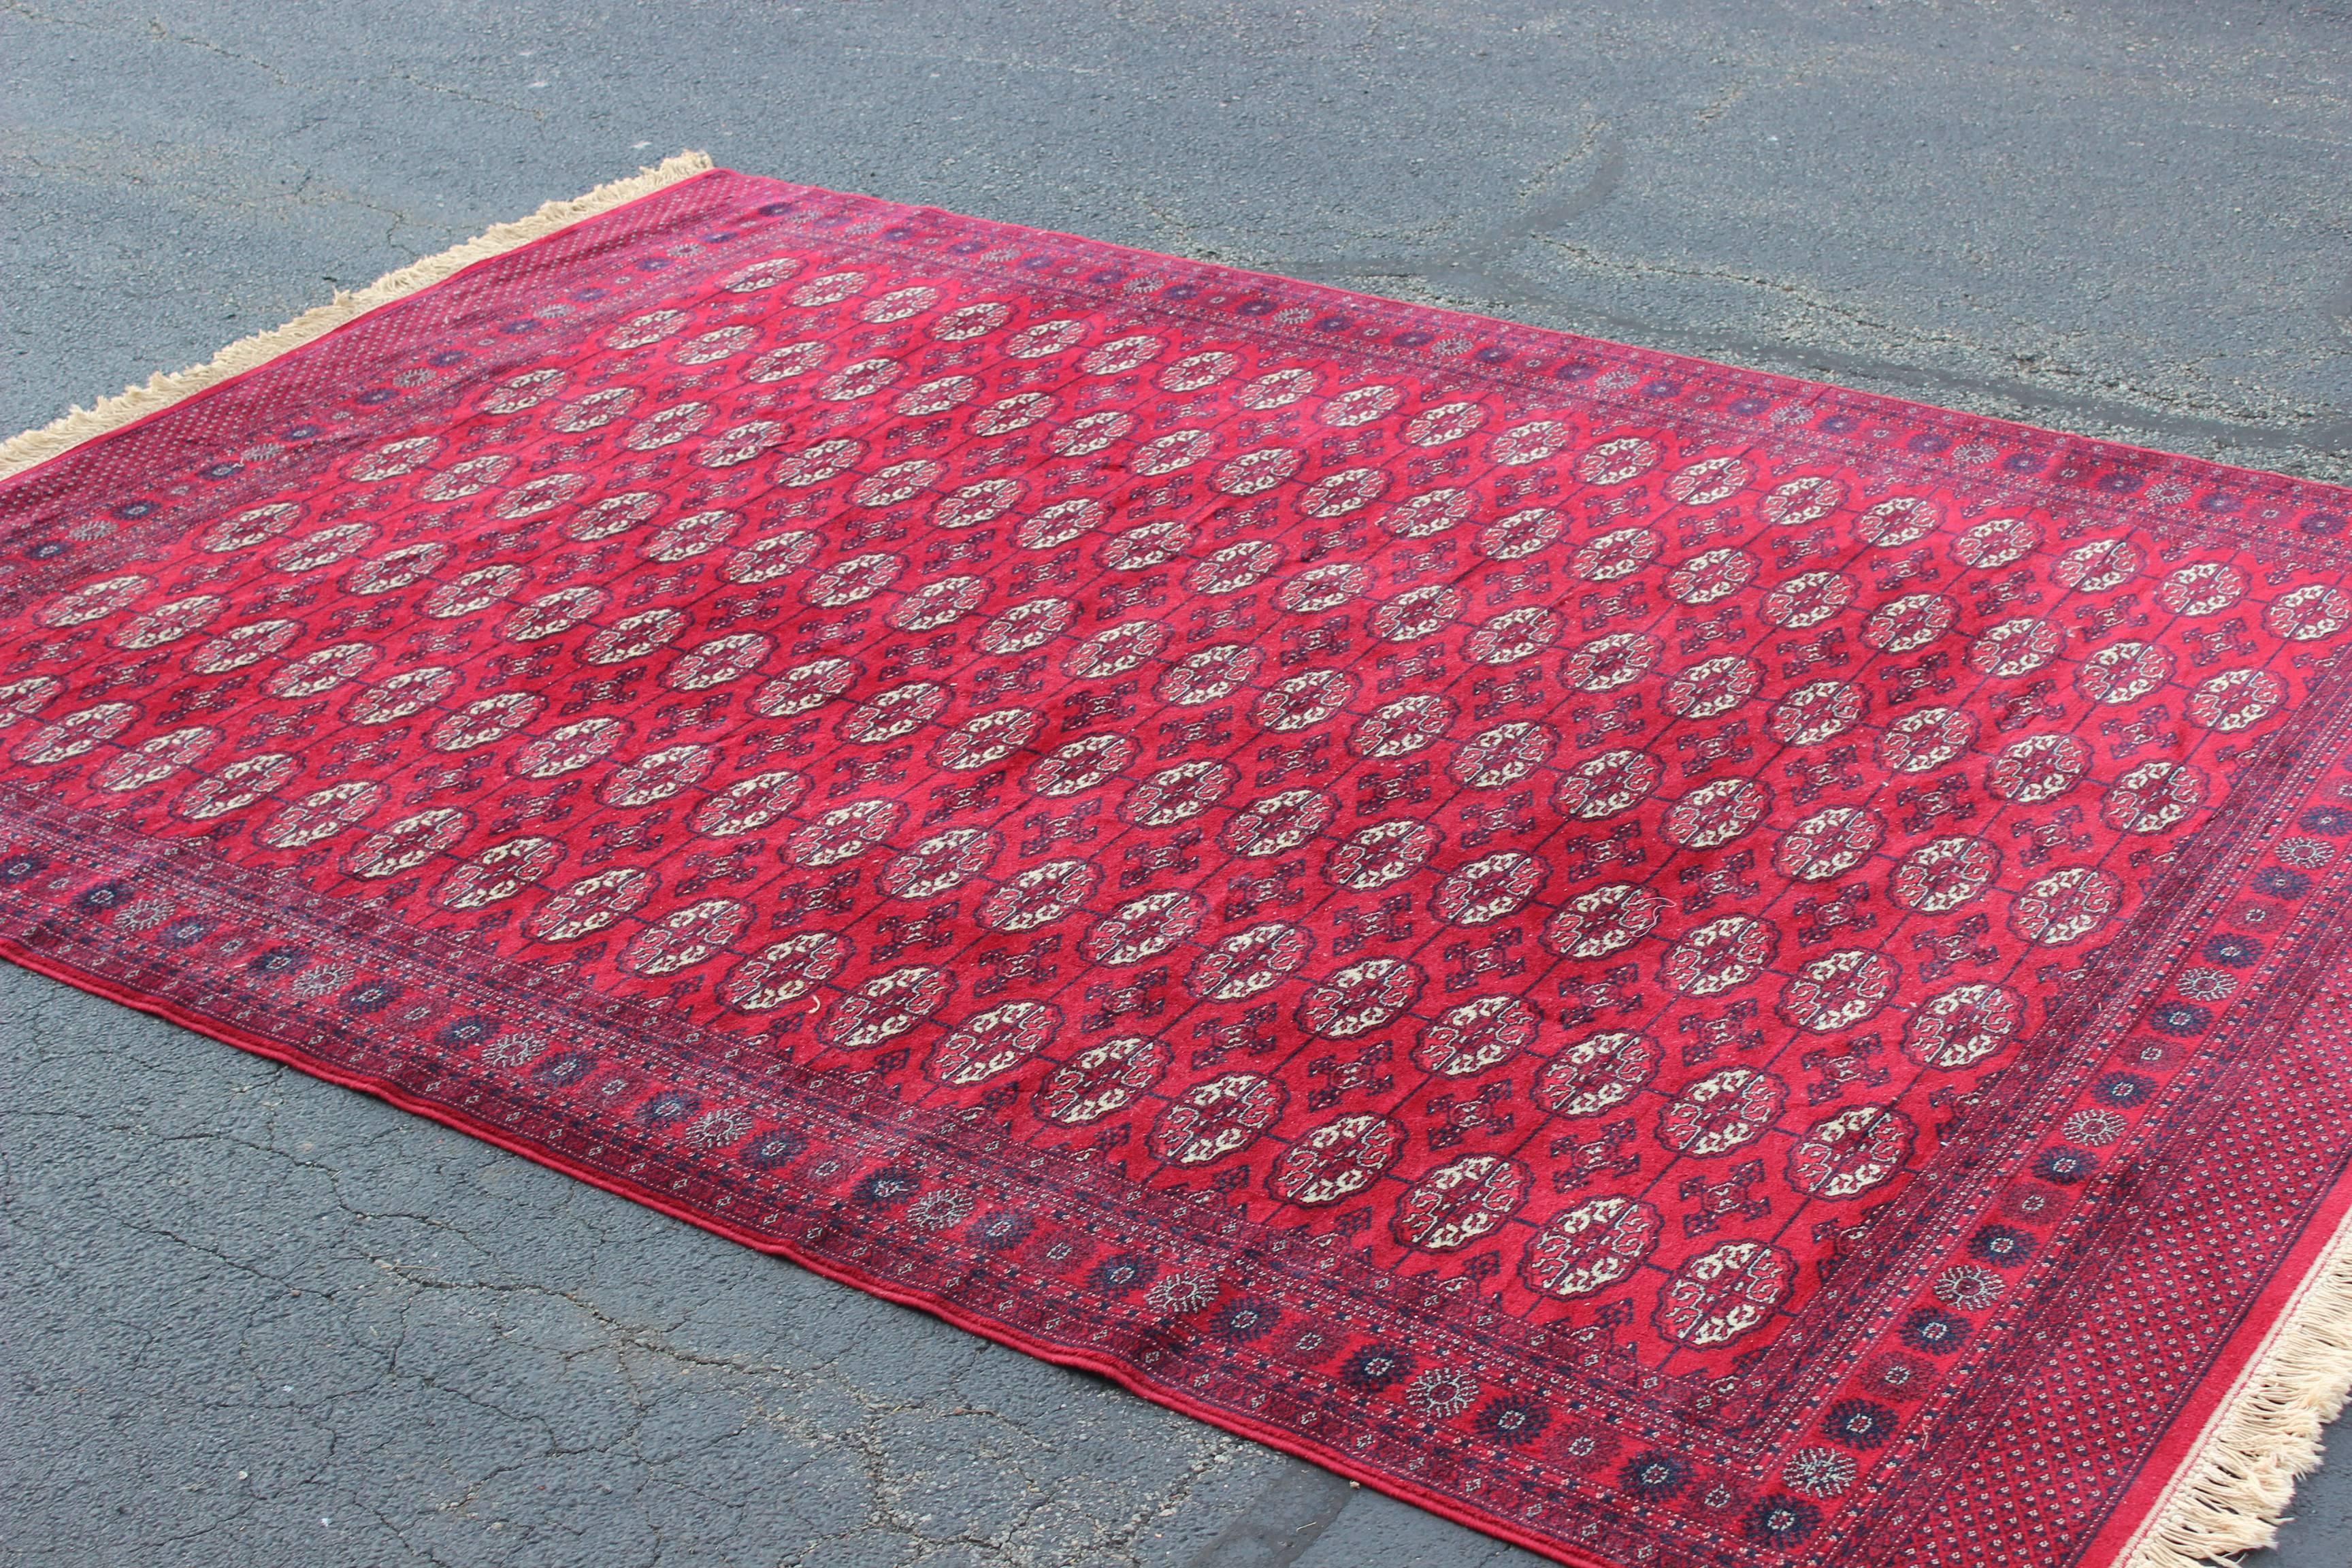 Stunning 1950s 100% wool large Moroccan rug.